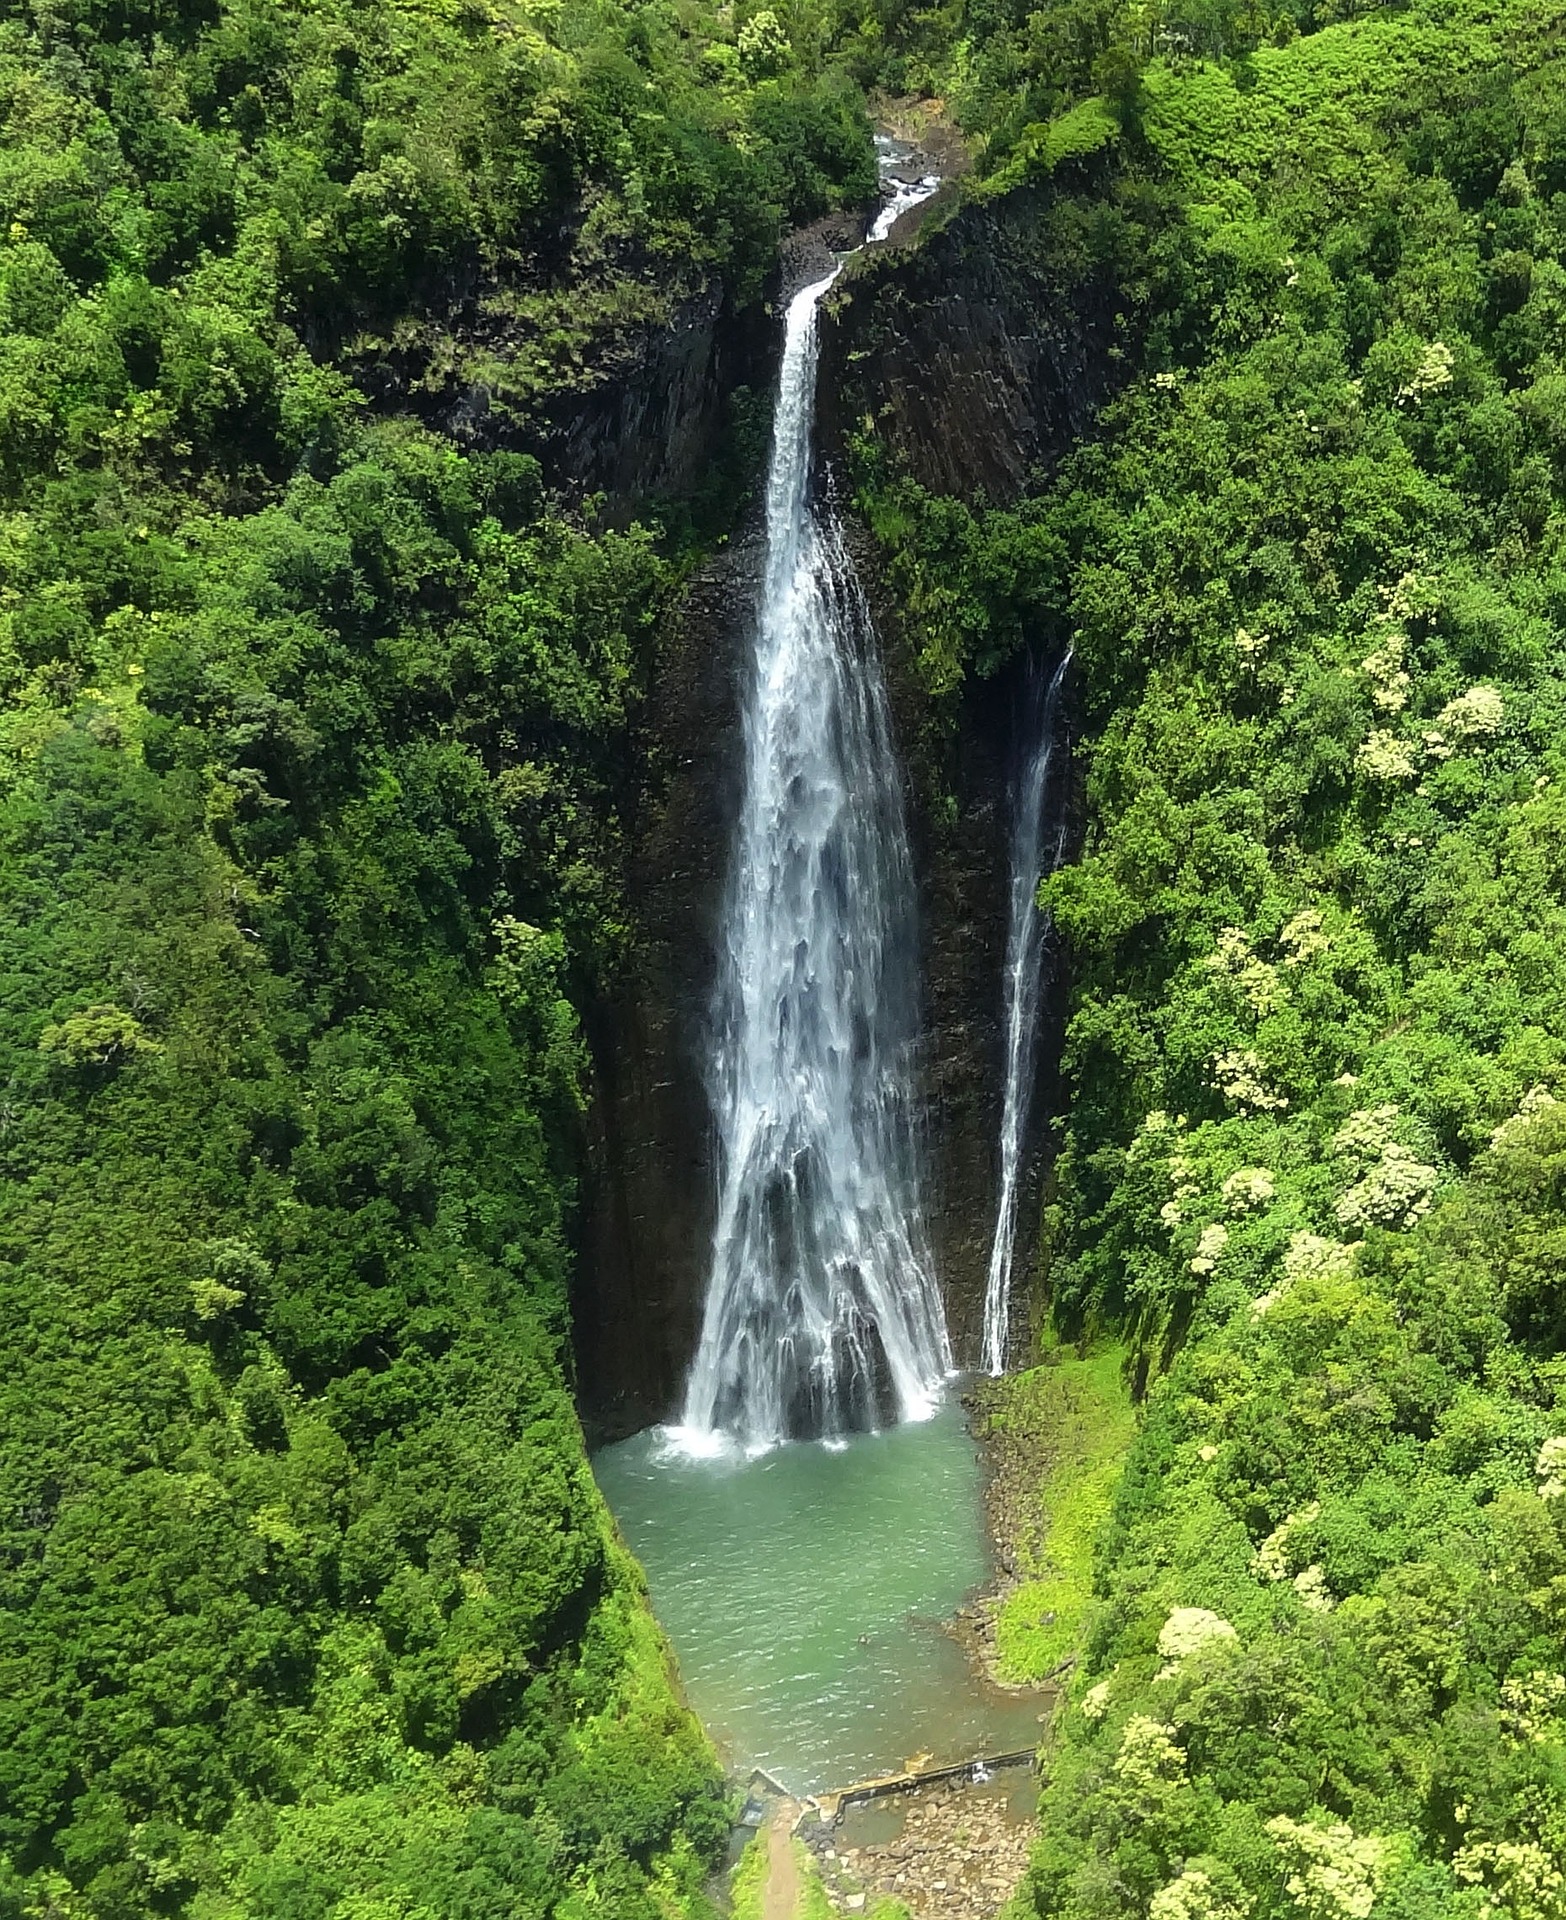 Kauai's waterfalls make for a memorable journey.